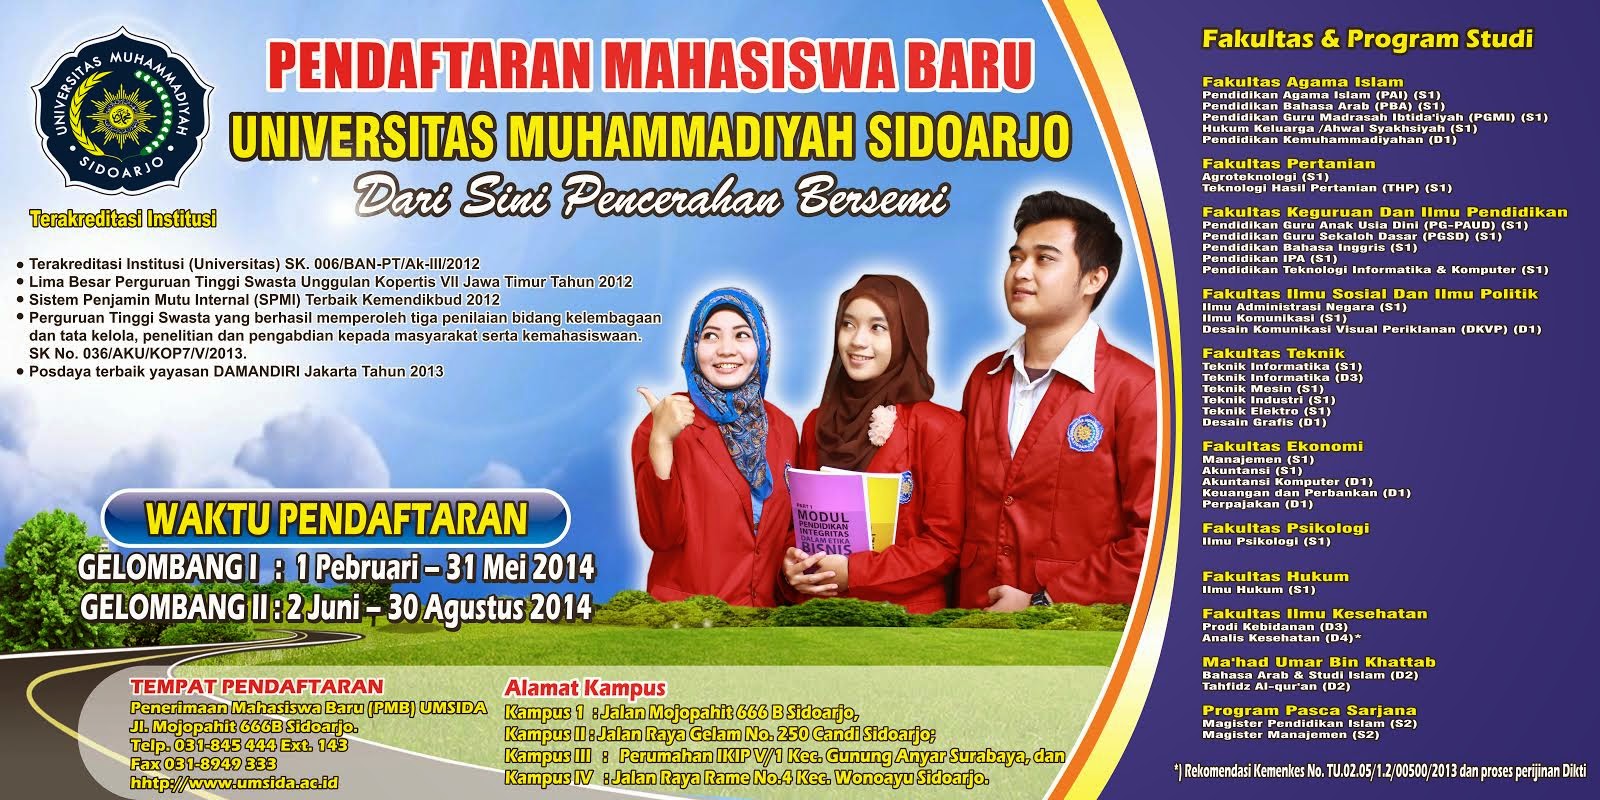 Pendaftaran Mahasiswa Baru Universitas Muhammadiyah 